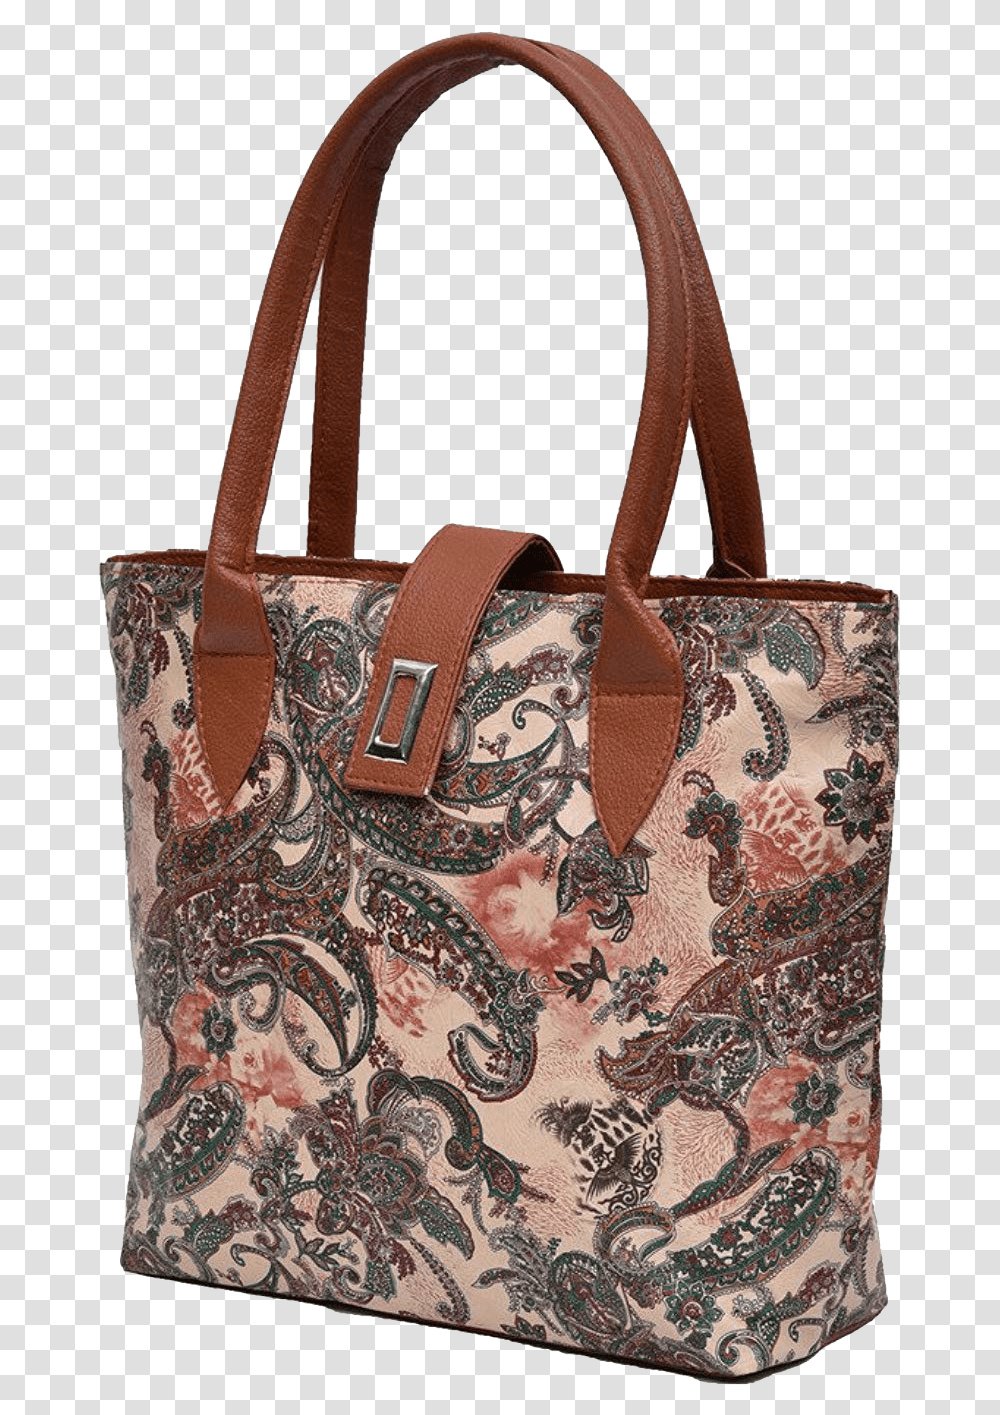 Ladies Bags Background Image Tote Bag, Handbag, Accessories, Accessory, Purse Transparent Png